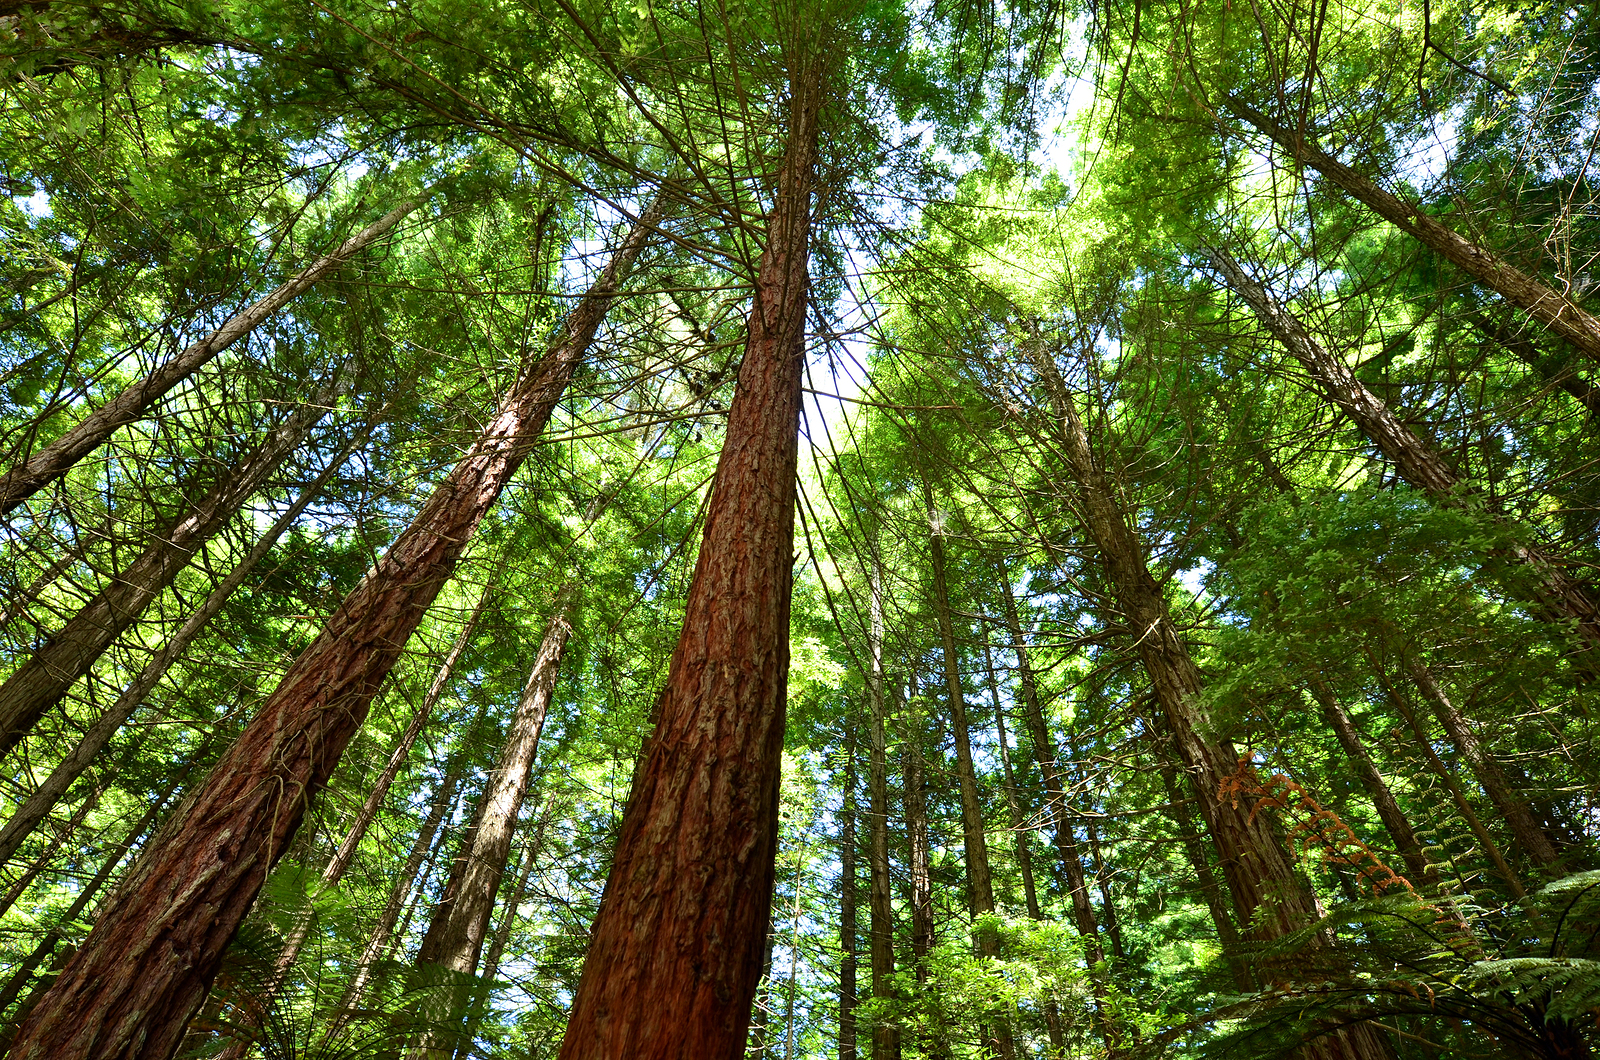 ROTORUA NZL - JAN 12 2015: Trees in Redwoods Forest - a popular travel location in Rotorua, New Zealand